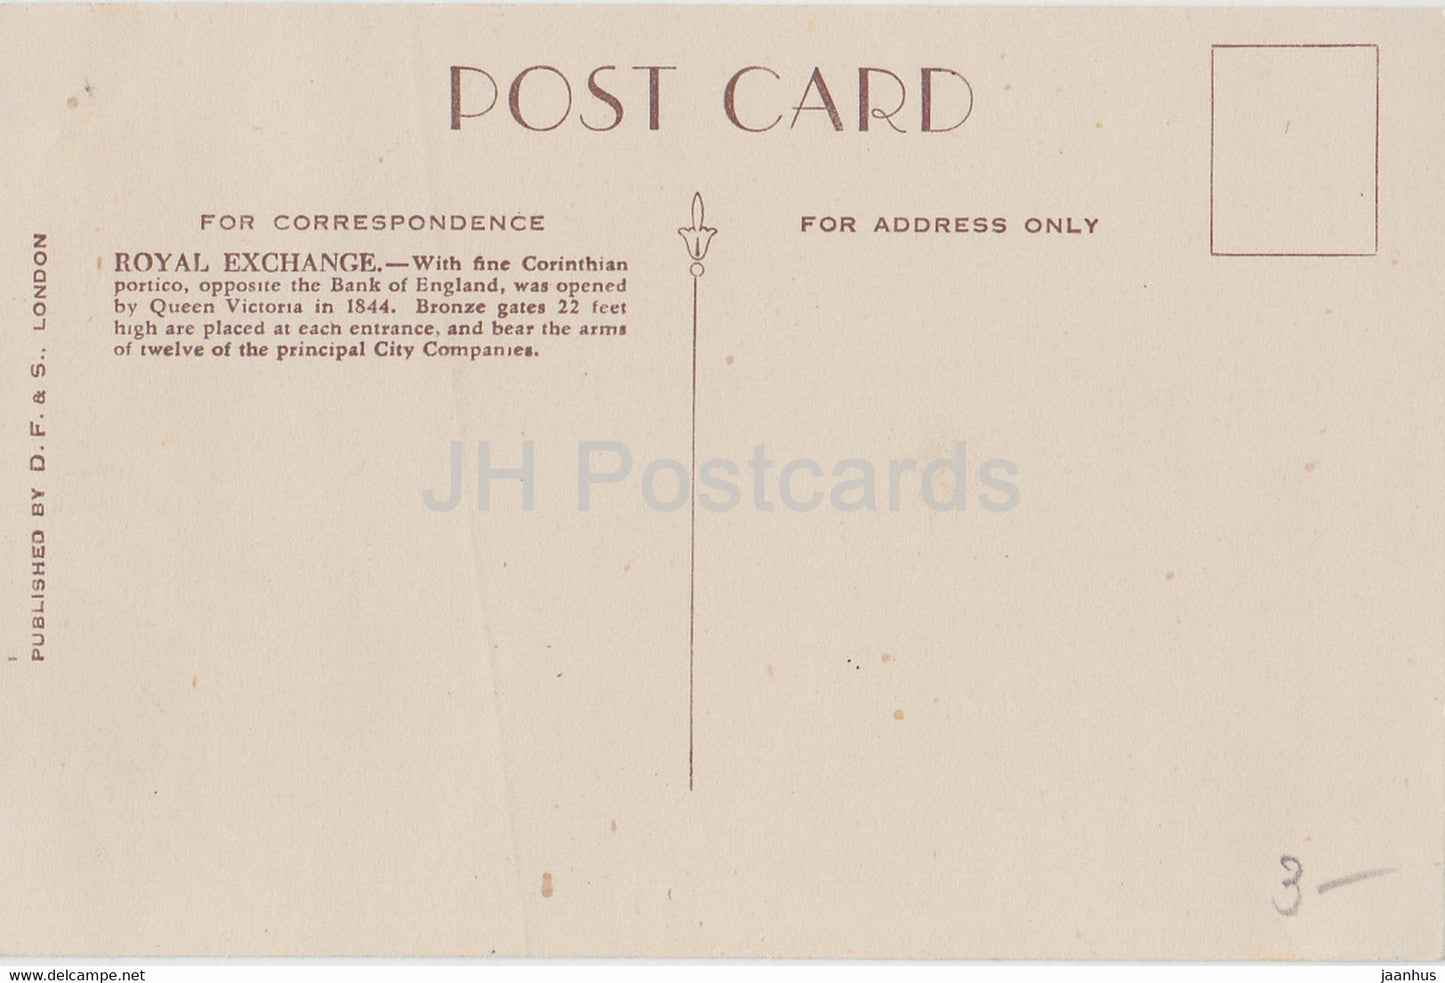 Londres - The Royal Exchange - voiture - carte postale ancienne - Angleterre - Royaume-Uni - inutilisée